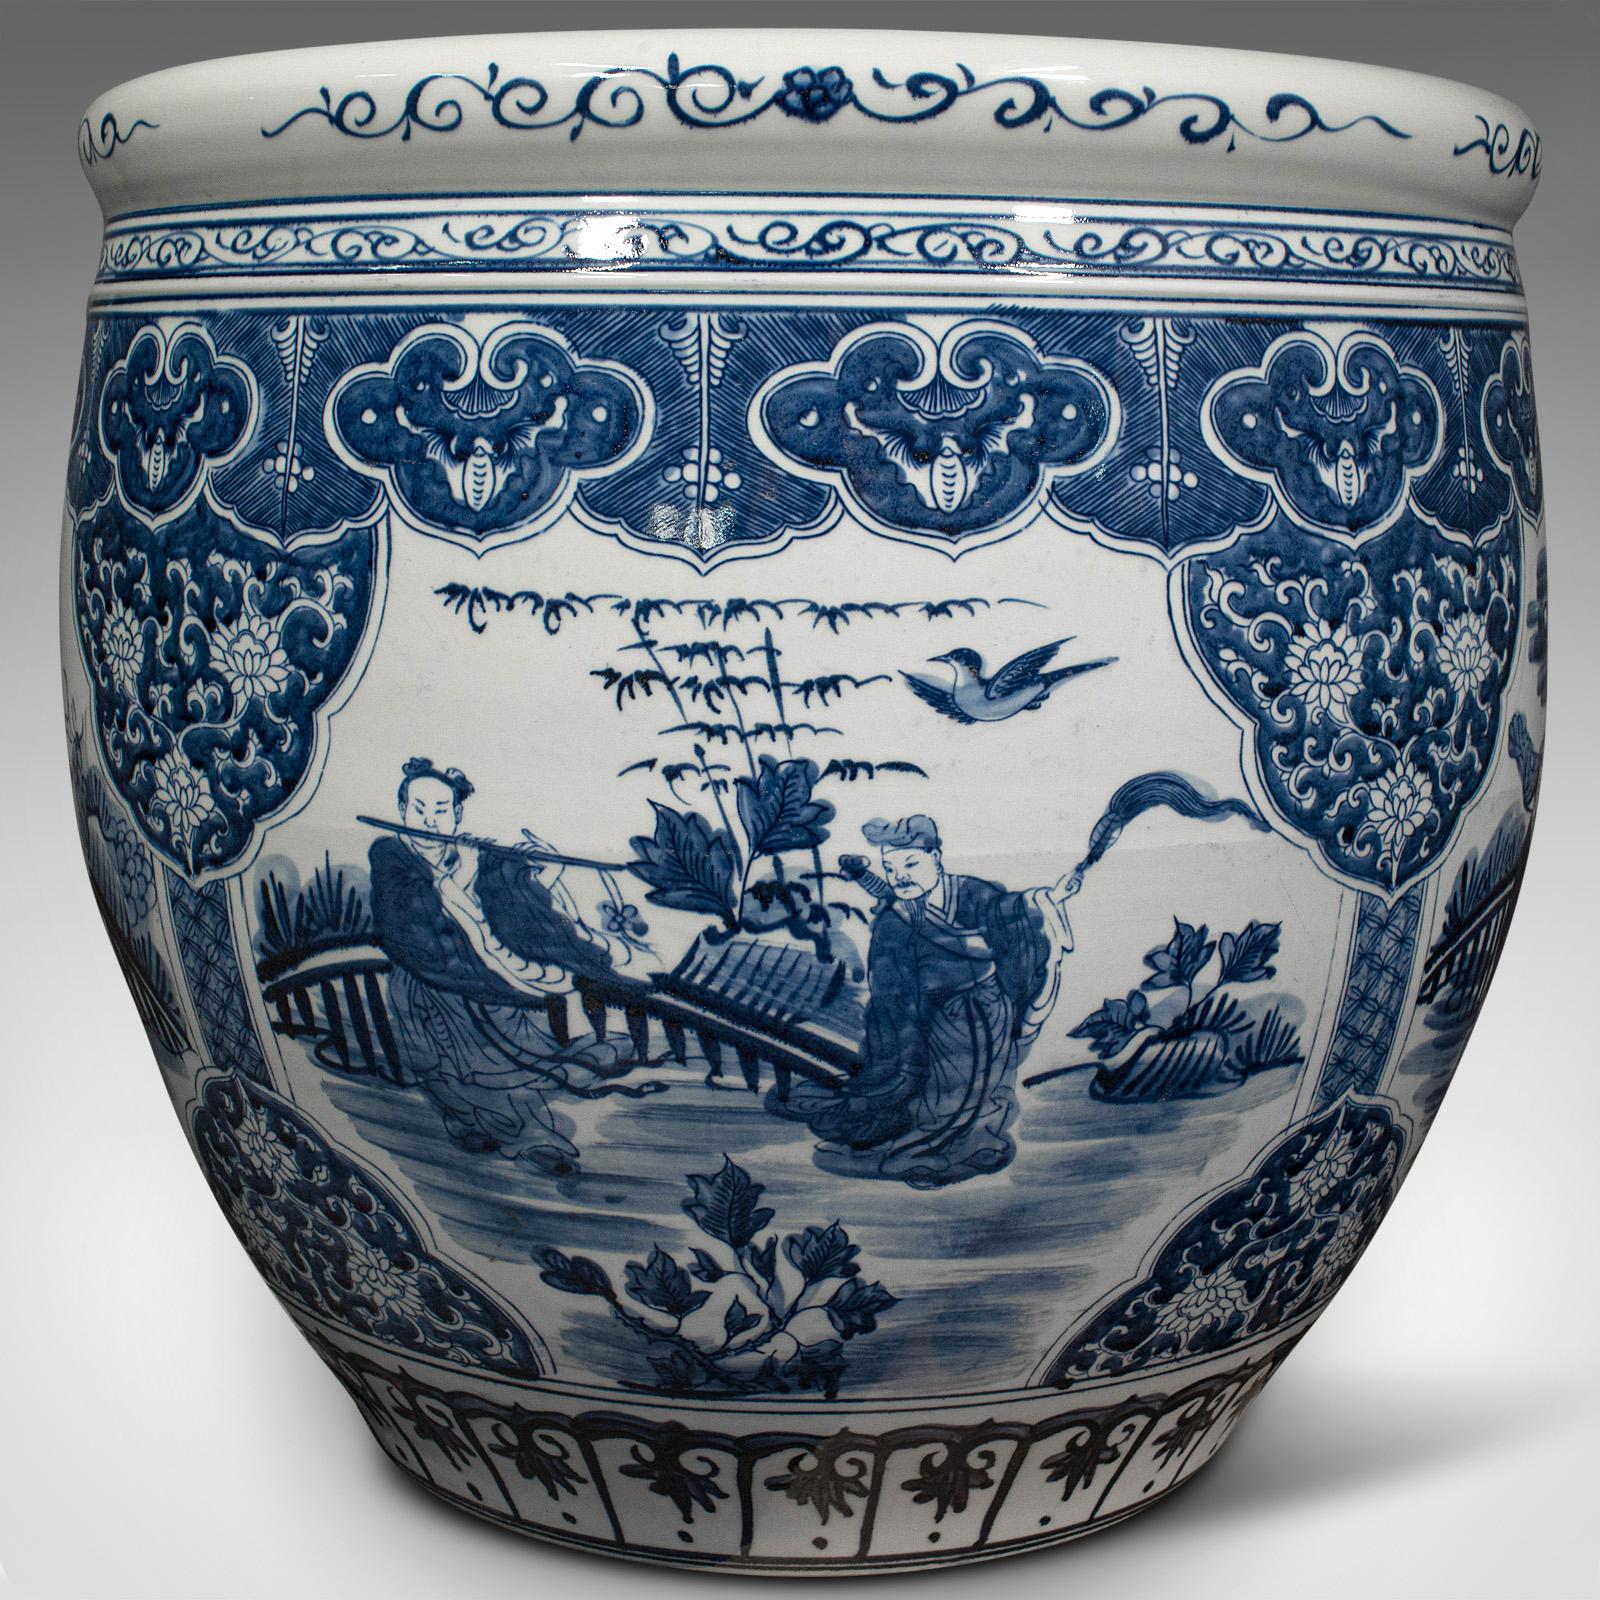 Huge Vintage Decorative Planter, Chinese, Ceramic, Jardiniere Pot, Fish Bowl 3